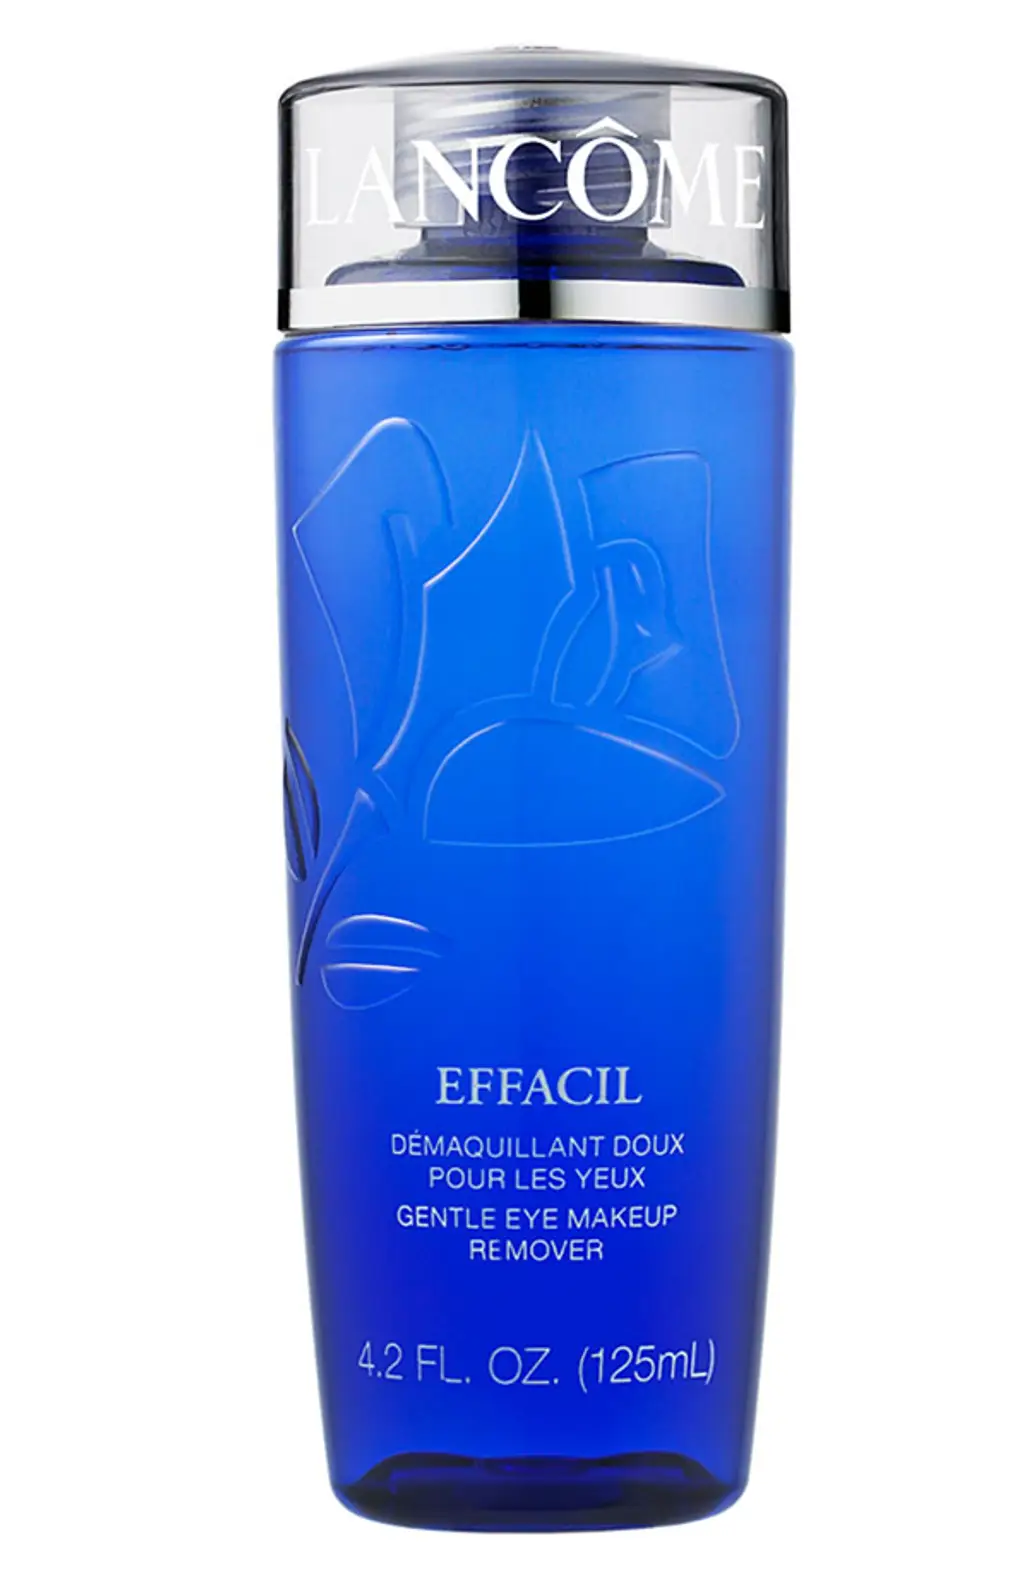 Lancome Effacil Gentle Eye Makeup Remover